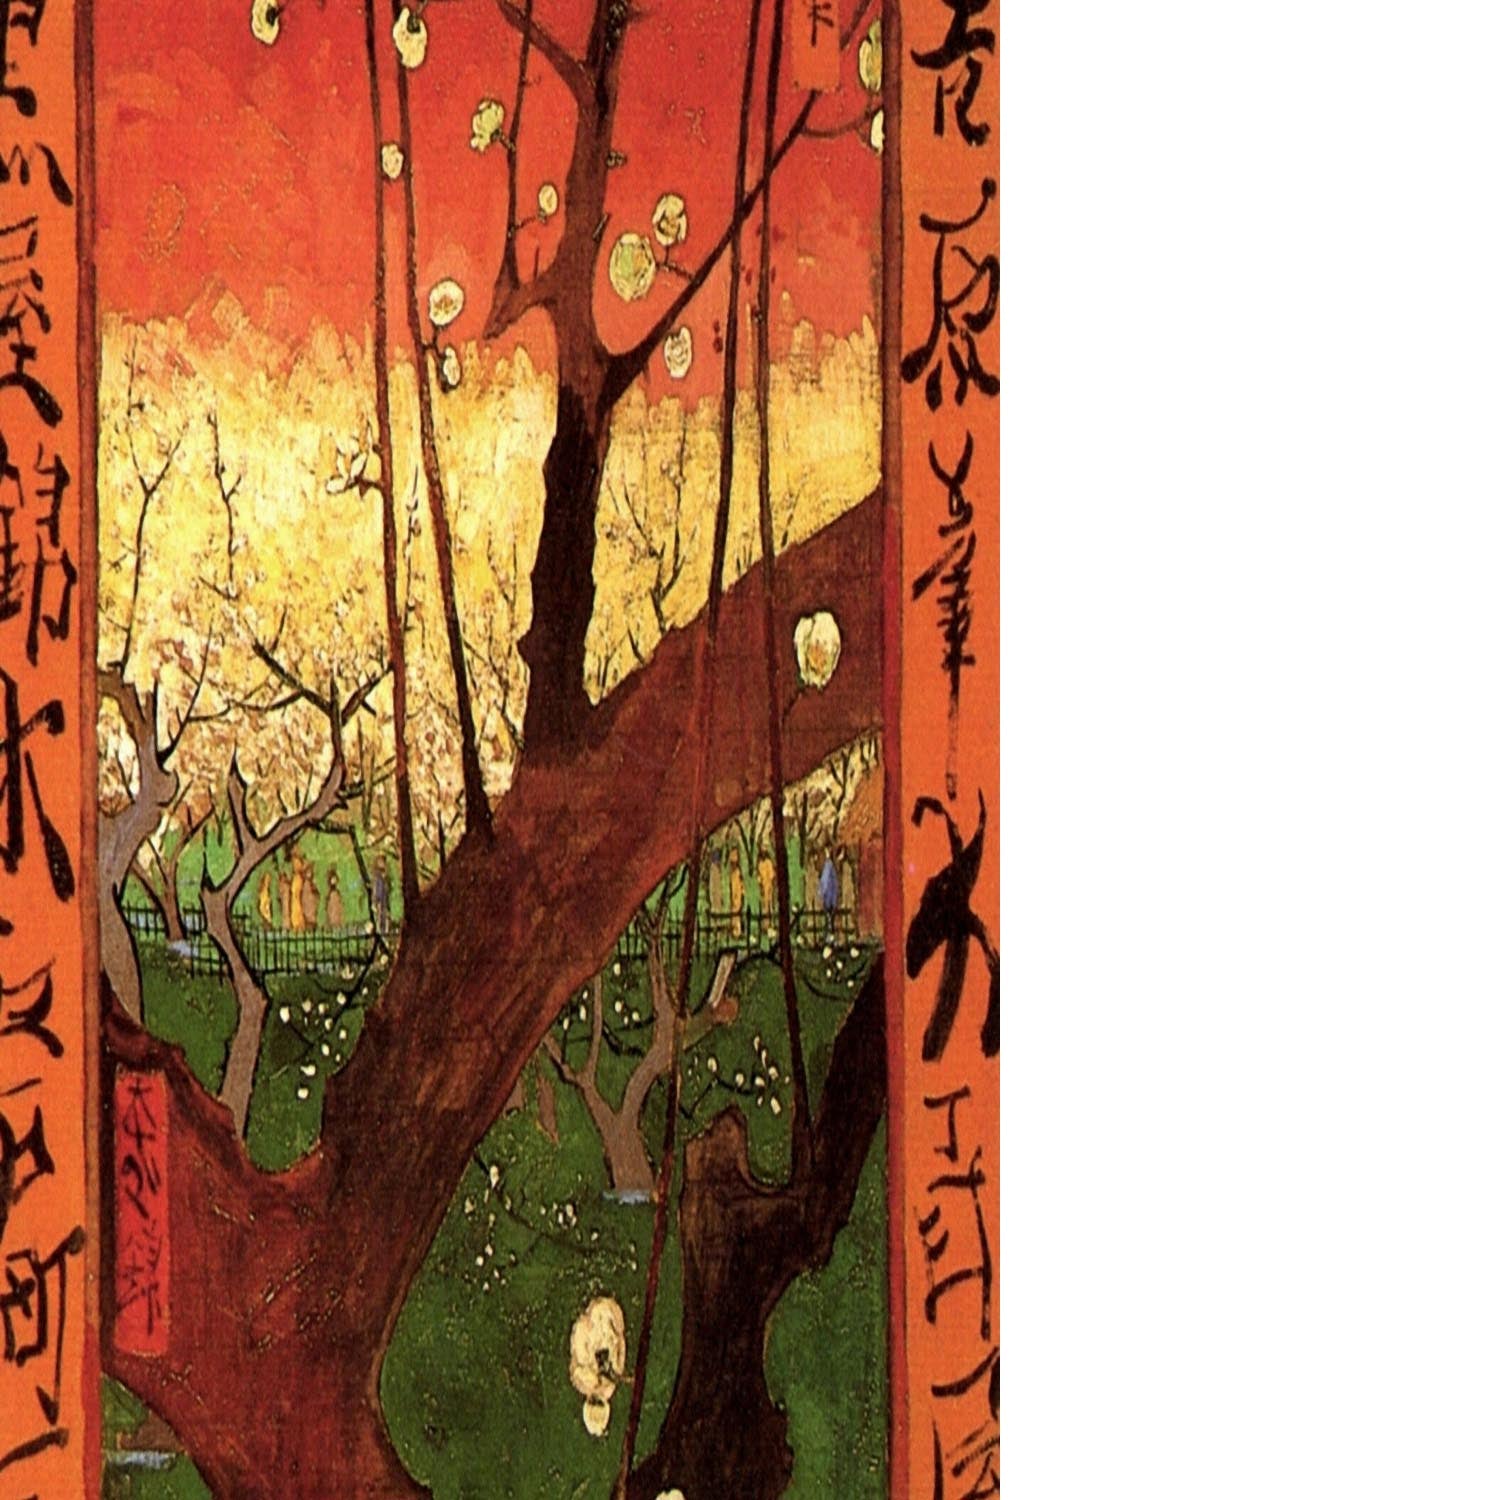 Japonaiserie Flowering Plum Tree after Hiroshige by Van Gogh Floating Framed Canvas